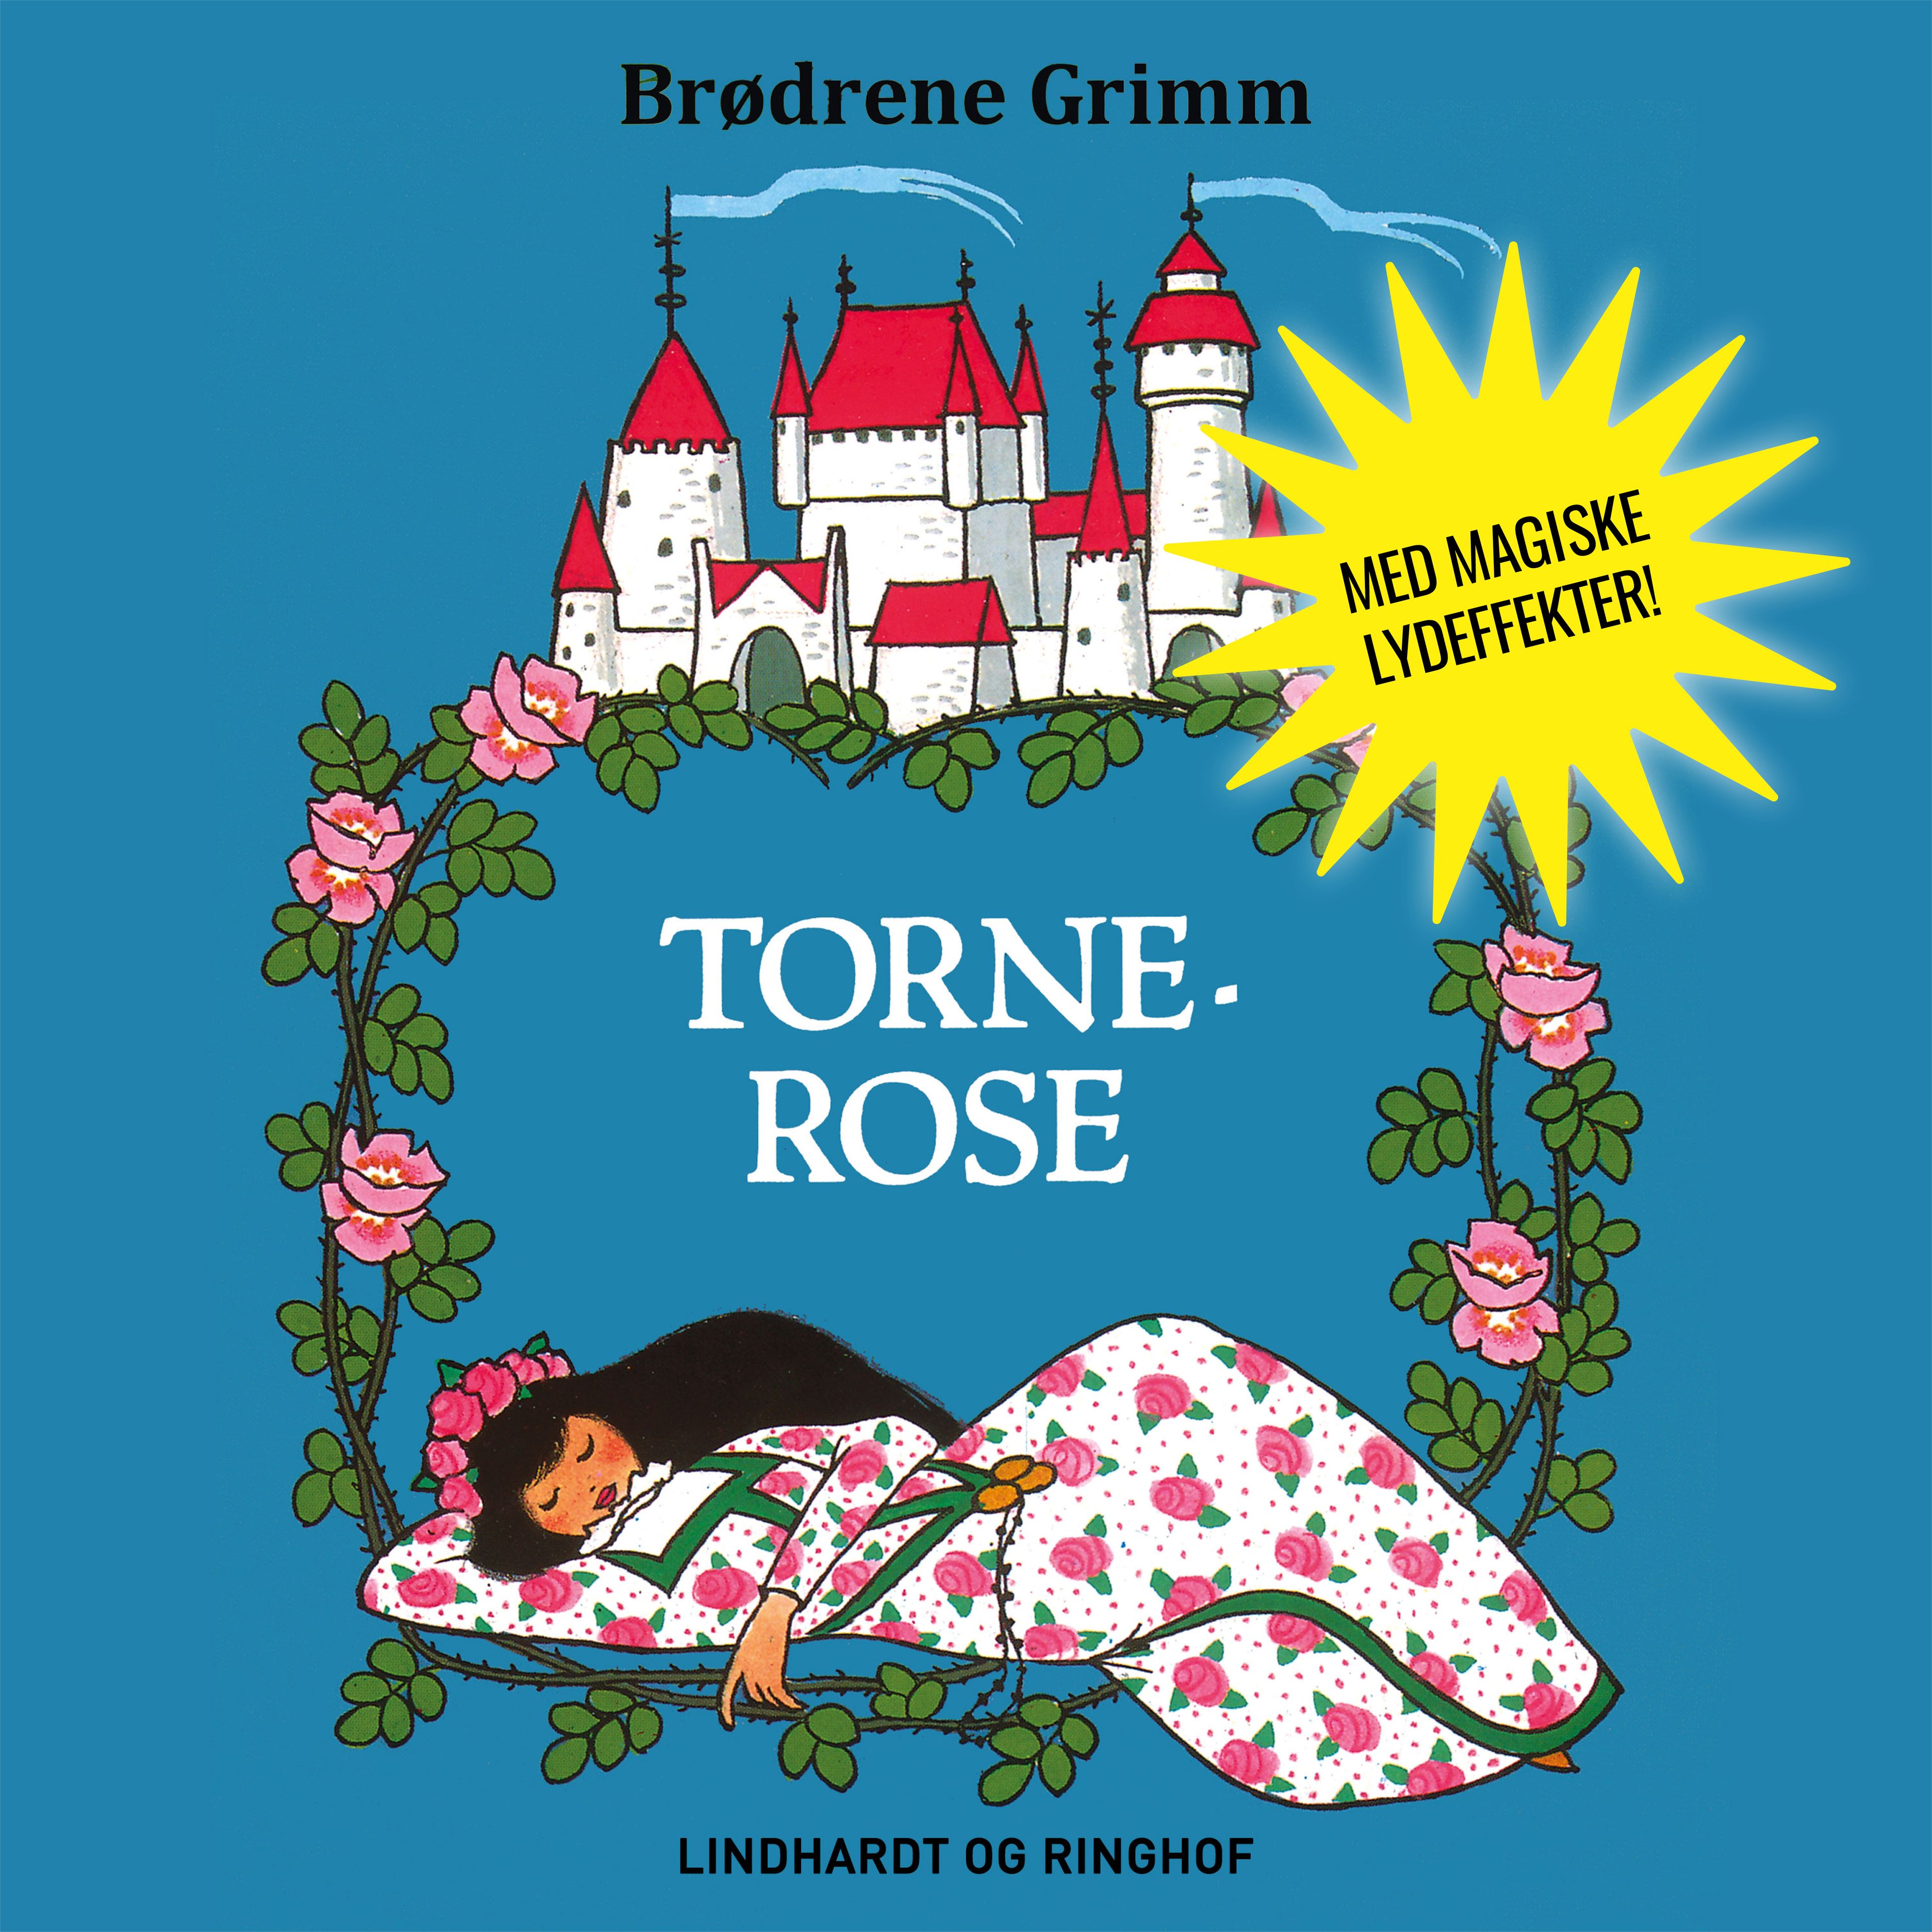 Tornerose - Lydbogsdrama, ljudbok av Bdr. Grimm. M.fl